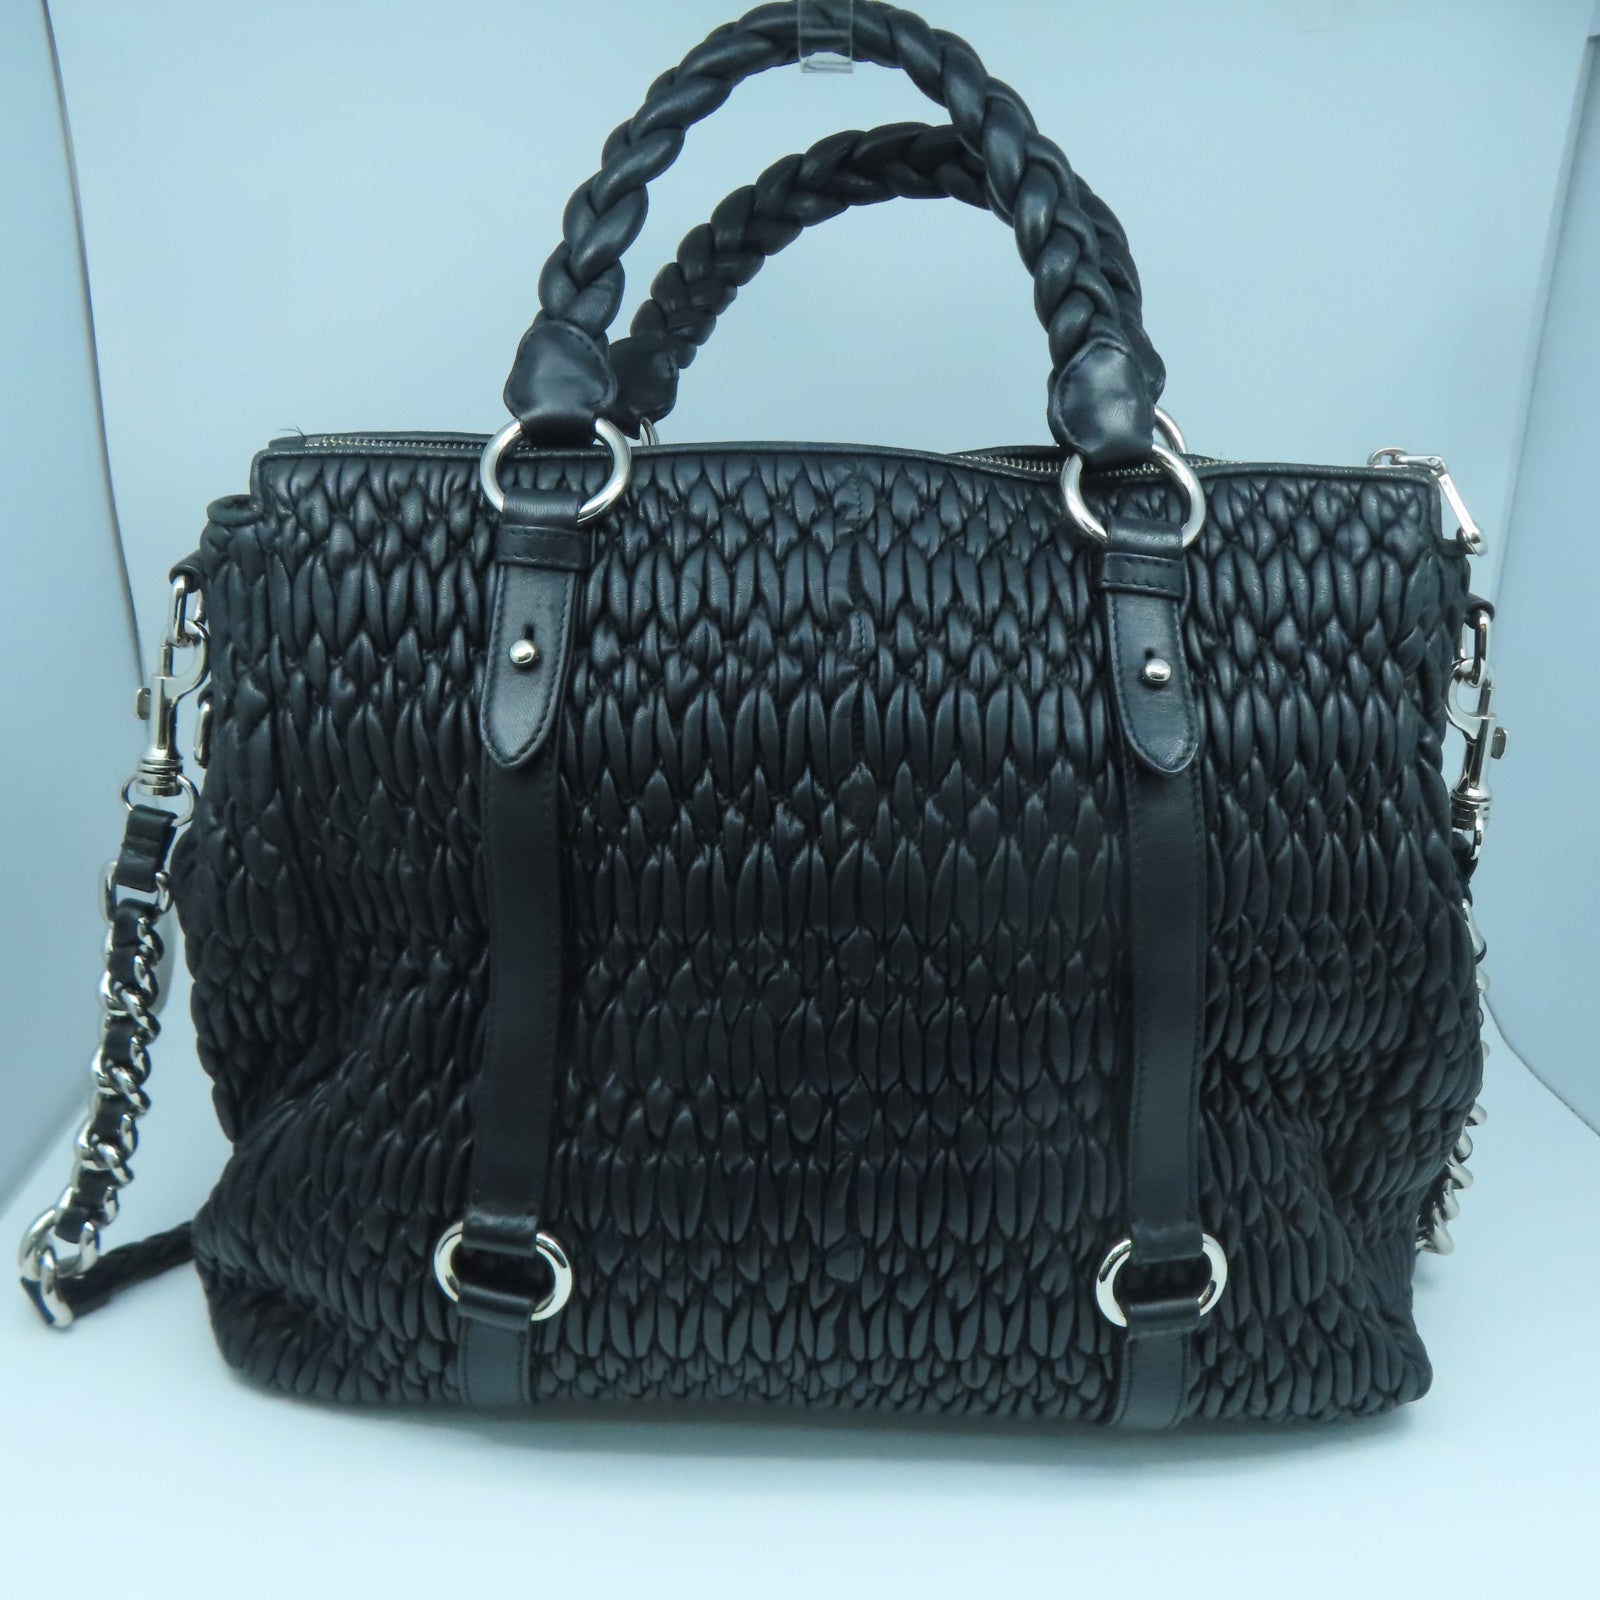 Miu Miu Matelassé Chain Strap Shoulder Bag in Black